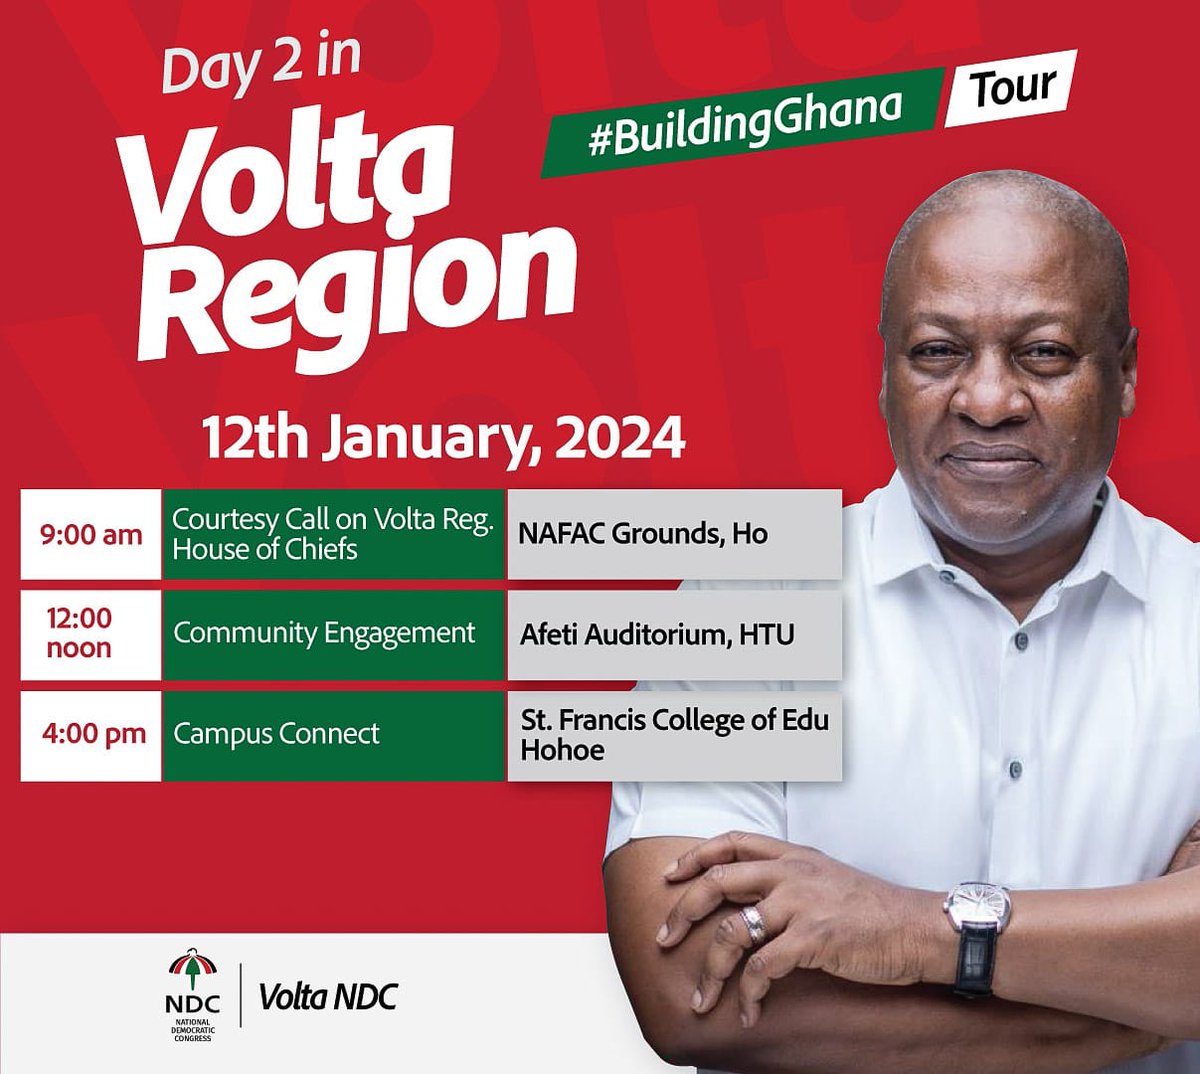 Volta Region welcomes John Mahama @JDMahama @Ndcpidgintweets @ndccommbureau @ndccommbureau @Rasta4NDC @Rasta4NDC @ndc